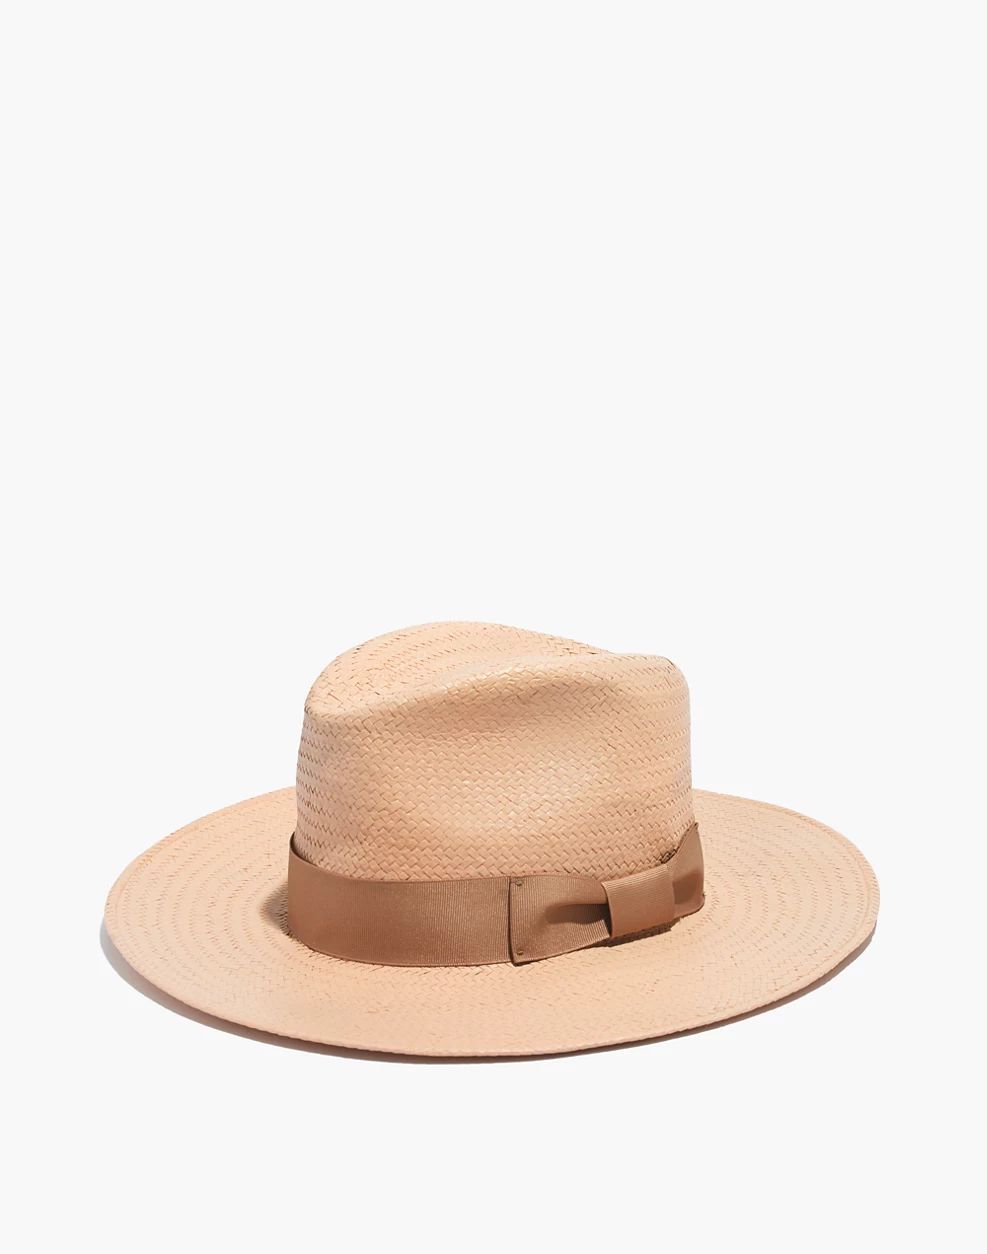 Madewell x Biltmore Panama Hat | Madewell